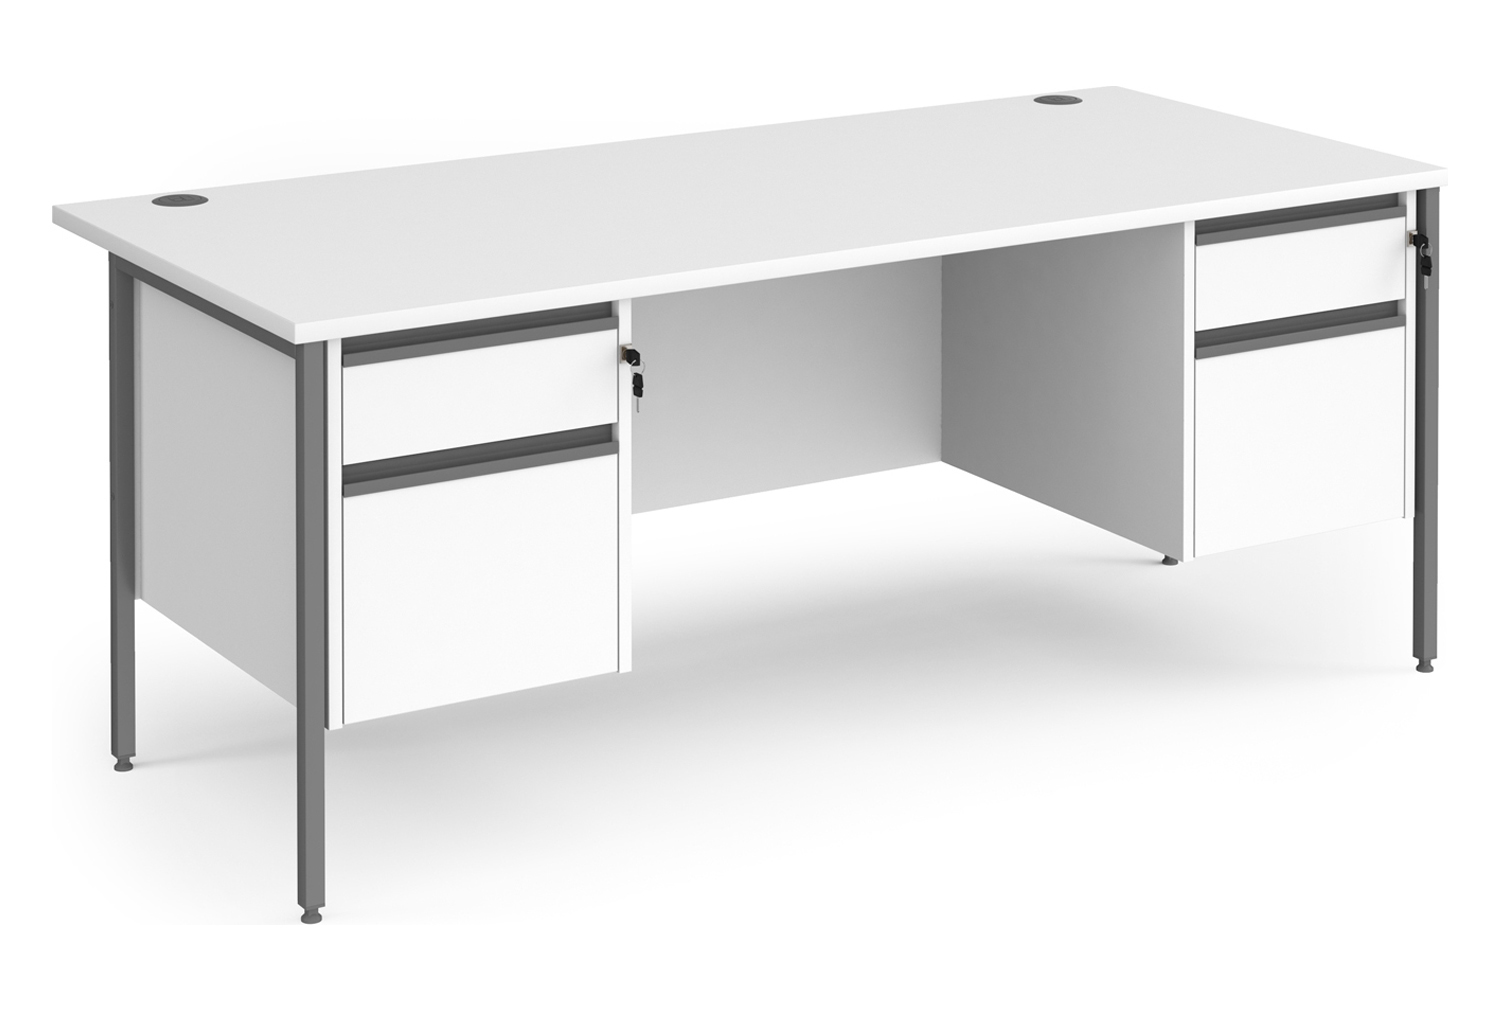 Value Line Classic+ Rectangular H-Leg Office Desk 2+2 Drawers (Graphite Leg), 180wx80dx73h (cm), White, Express Delivery